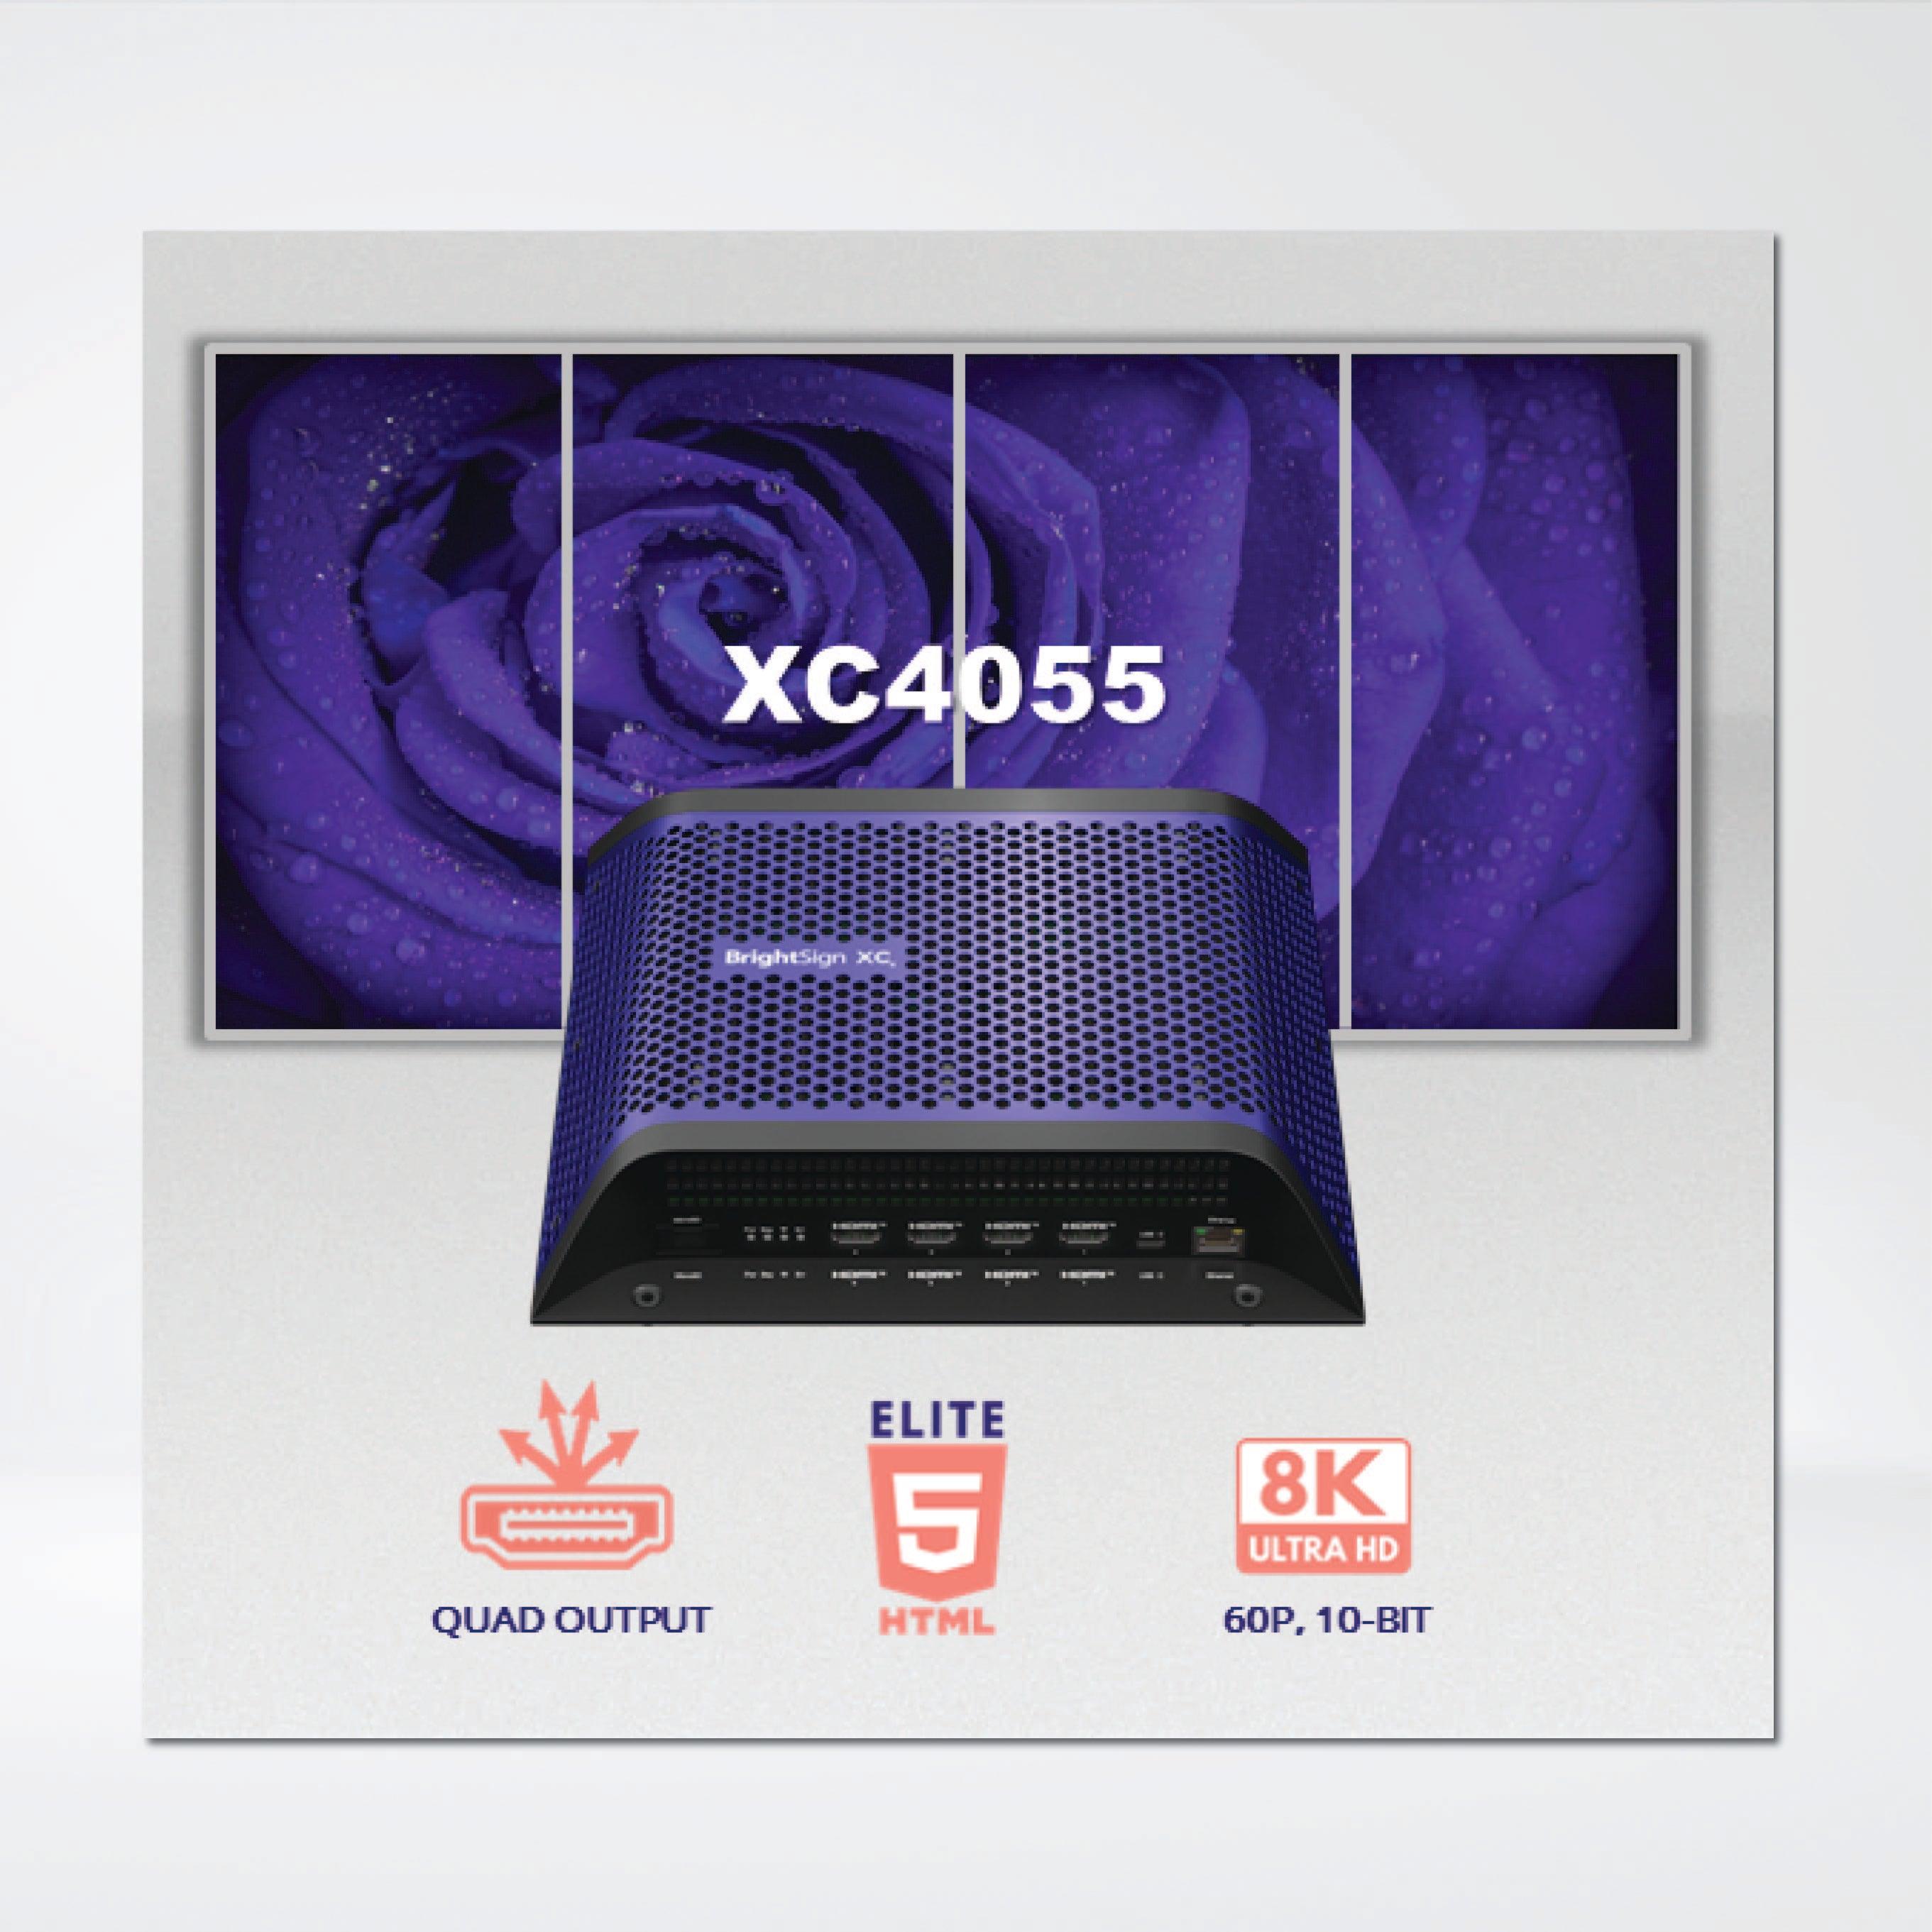 XC4055 ELITE PLAYER 8K, quad HDMI output player with Elite HTML performance + 64GB Micro SD - Riverplus